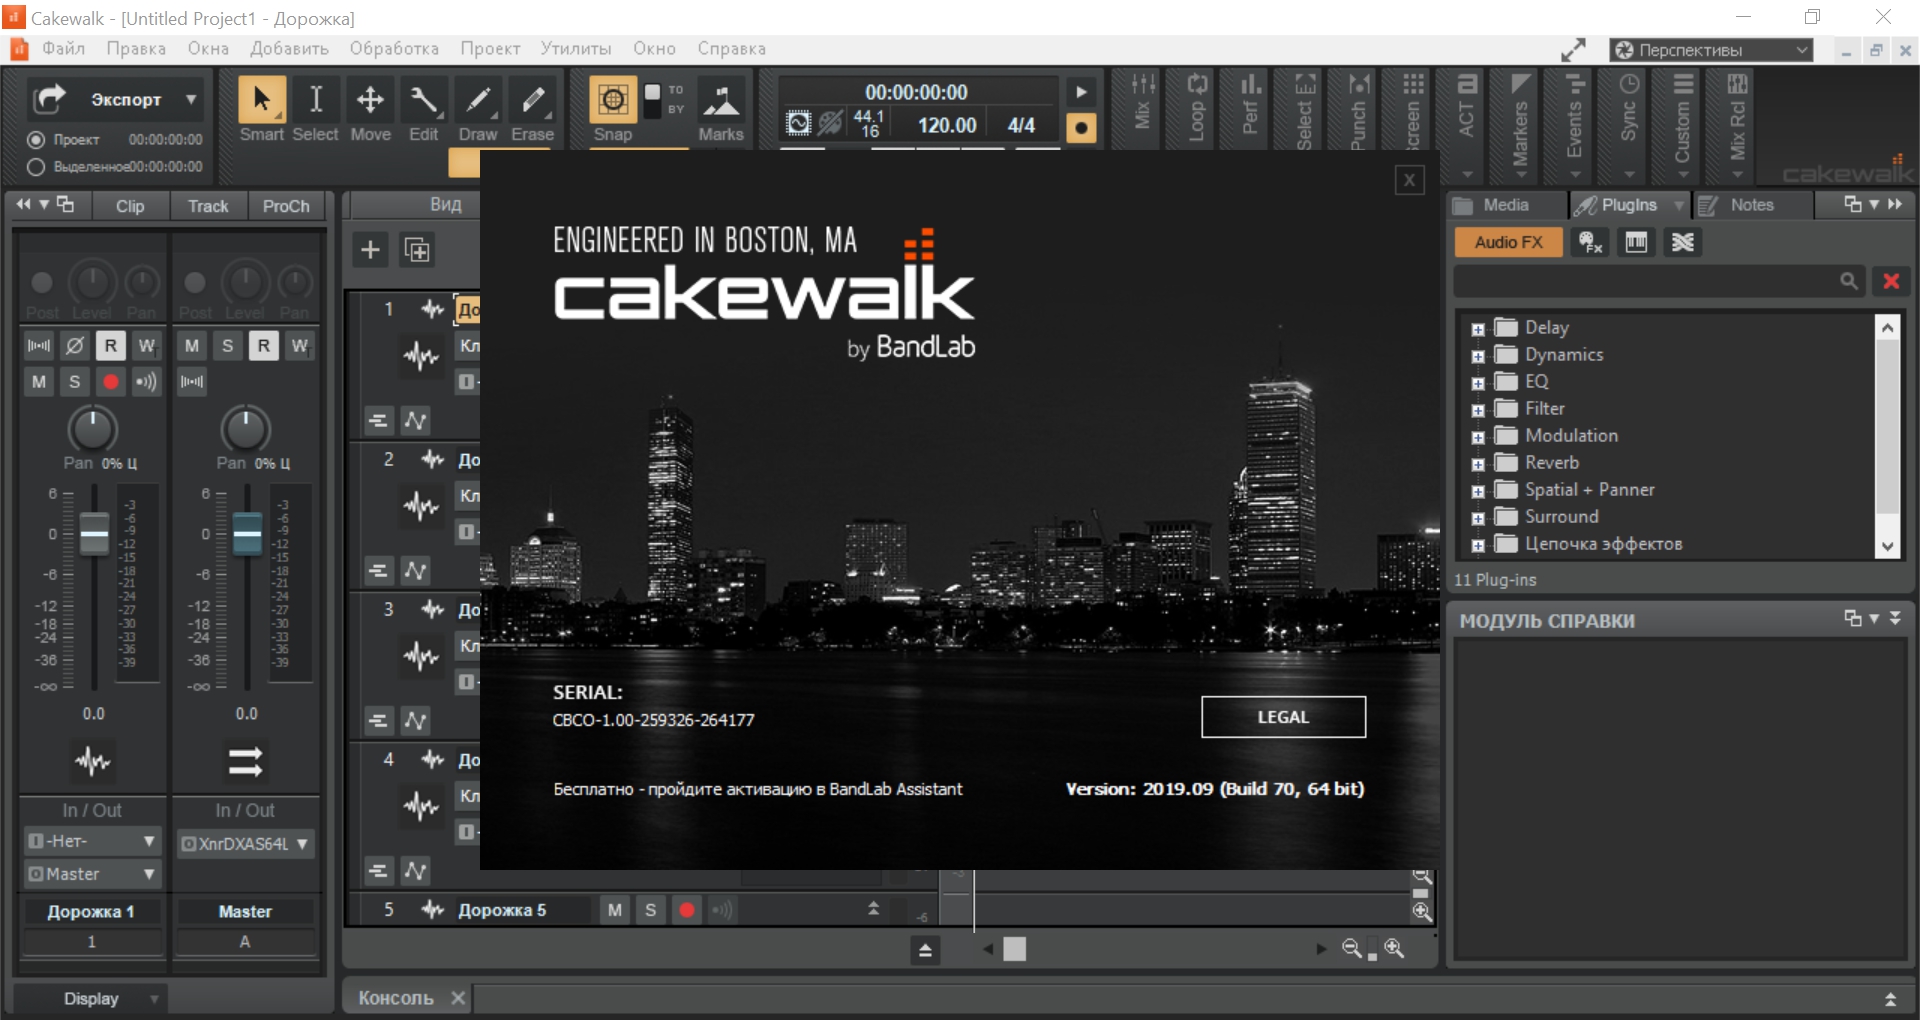 Cakewalk by BandLab 29.09.0.062 for windows download free